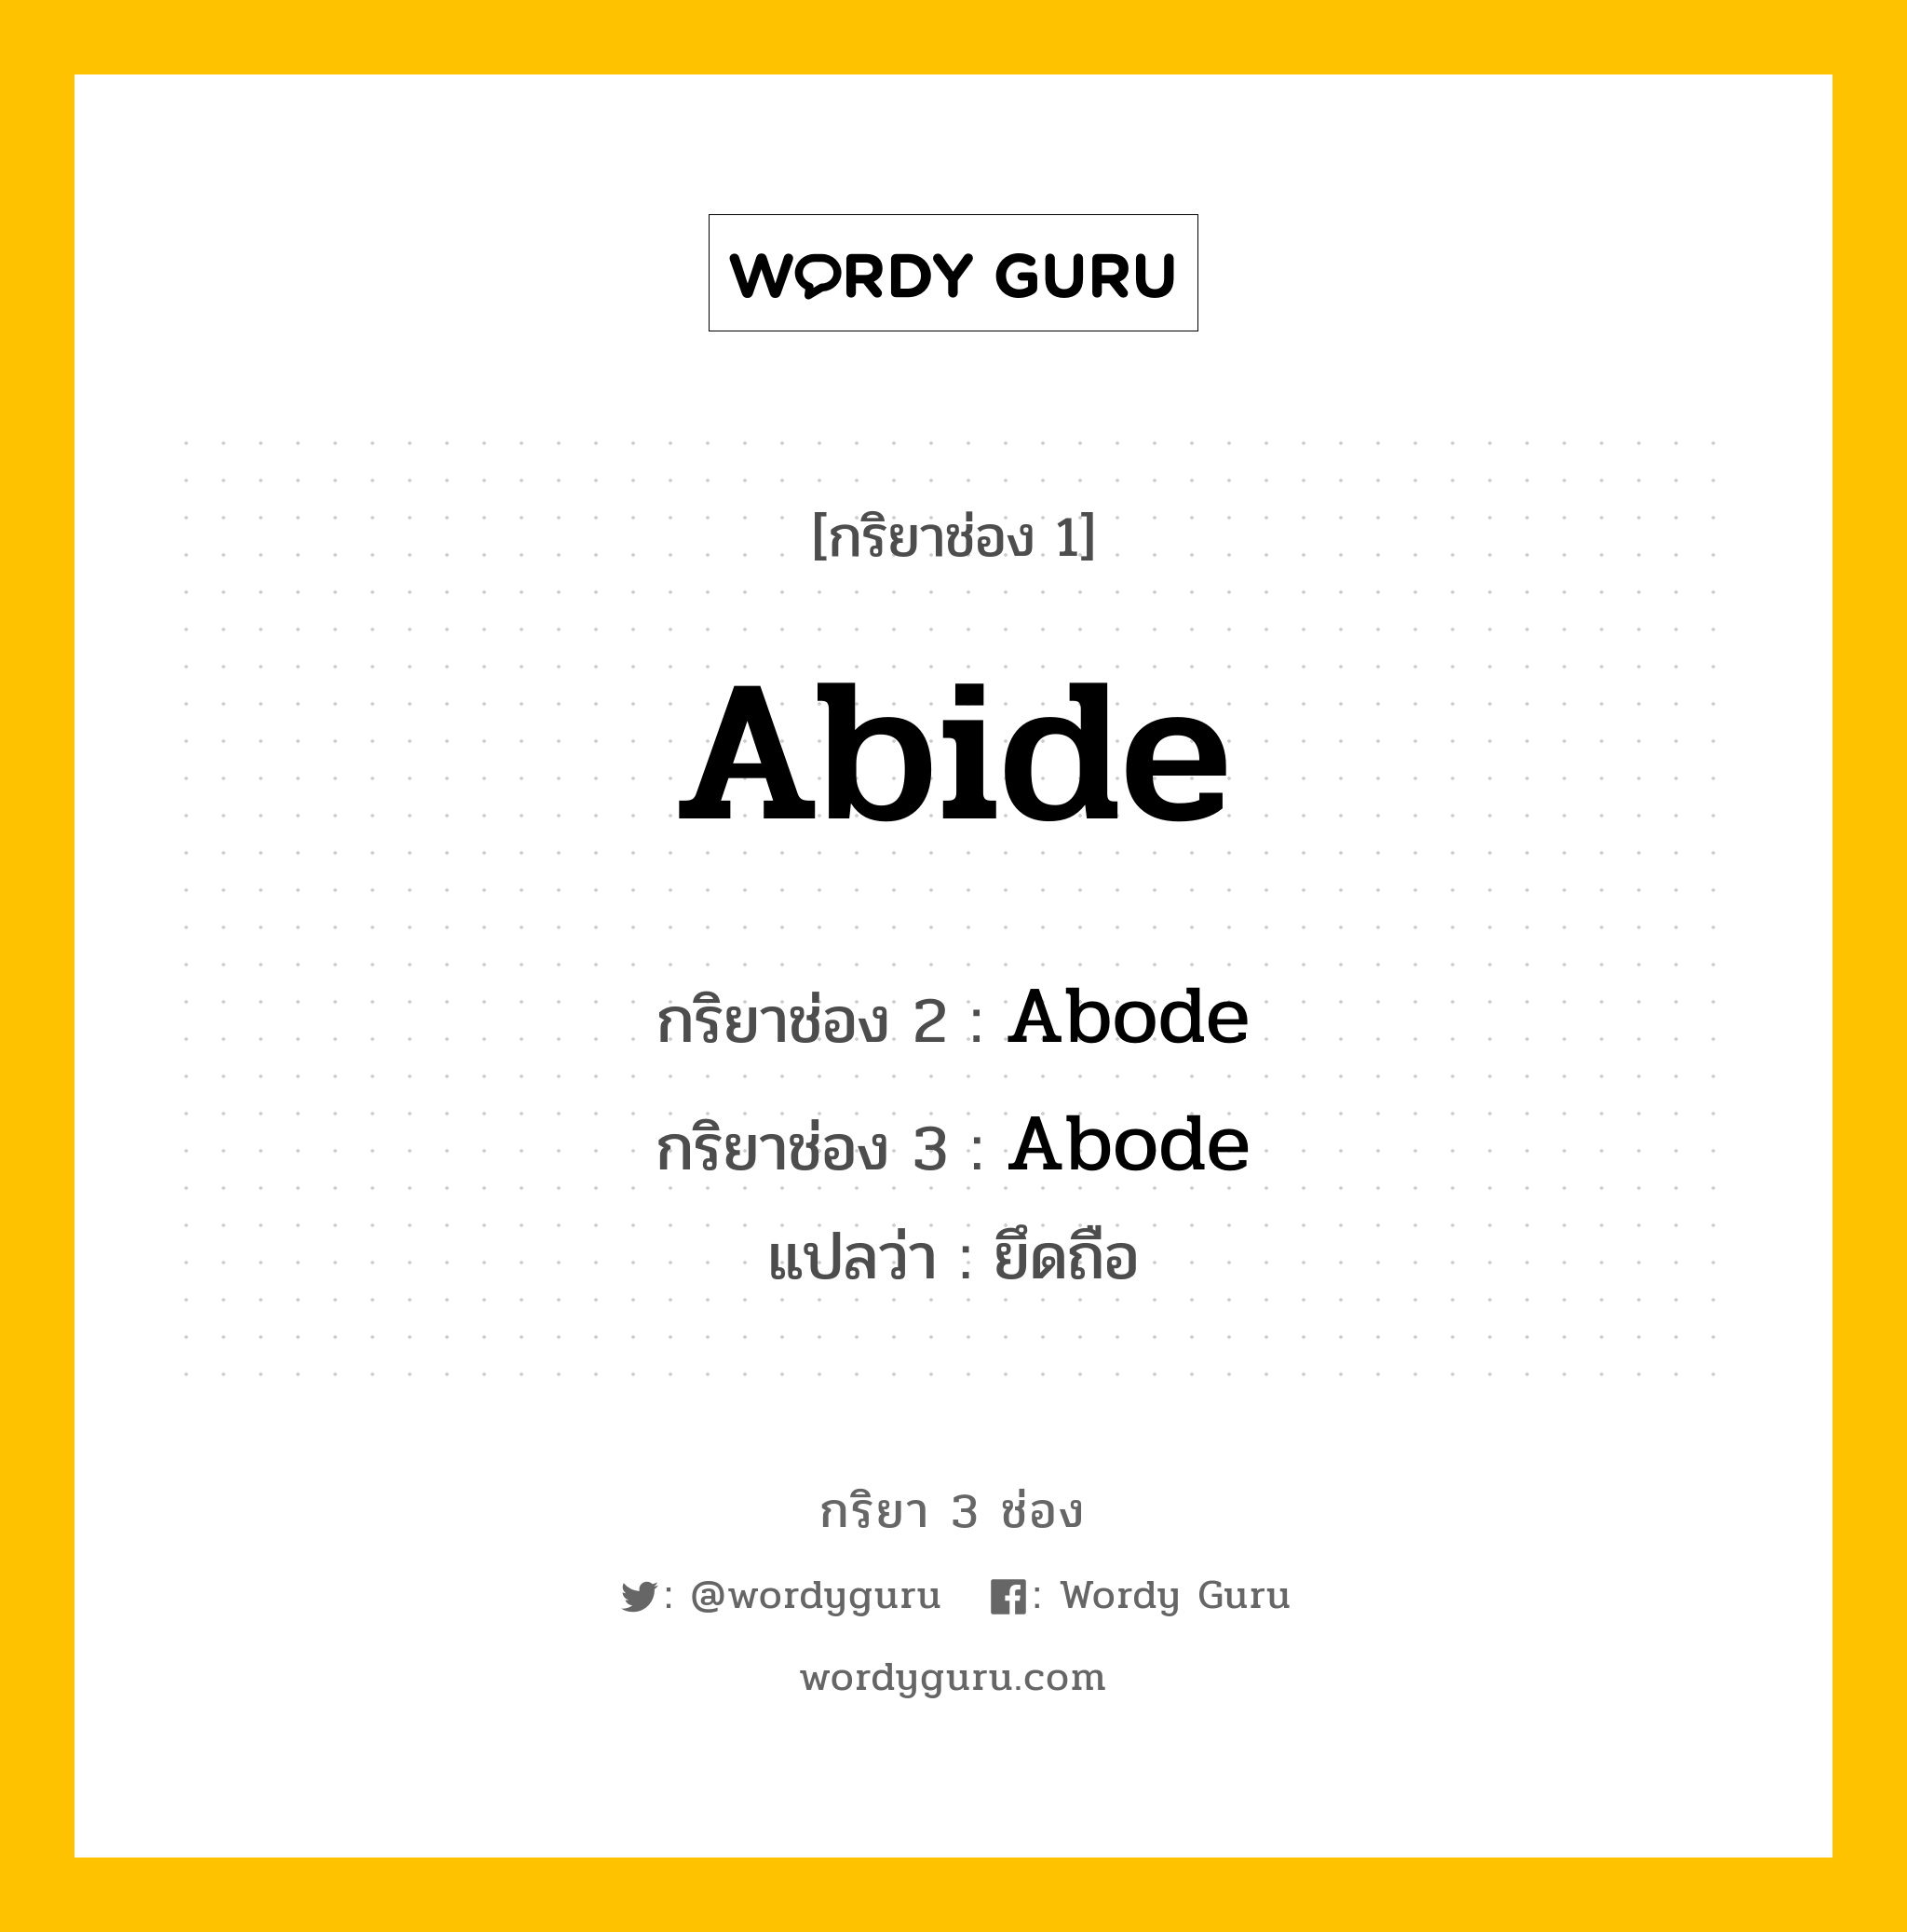 Abide มีกริยา 3 ช่องอะไรบ้าง? คำศัพท์ในกลุ่มประเภท Irregular Verb, กริยาช่อง 1 Abide กริยาช่อง 2 Abode กริยาช่อง 3 Abode แปลว่า ยึดถือ หมวด Irregular Verb มีหลายแบบ y หมวด Irregular Verb